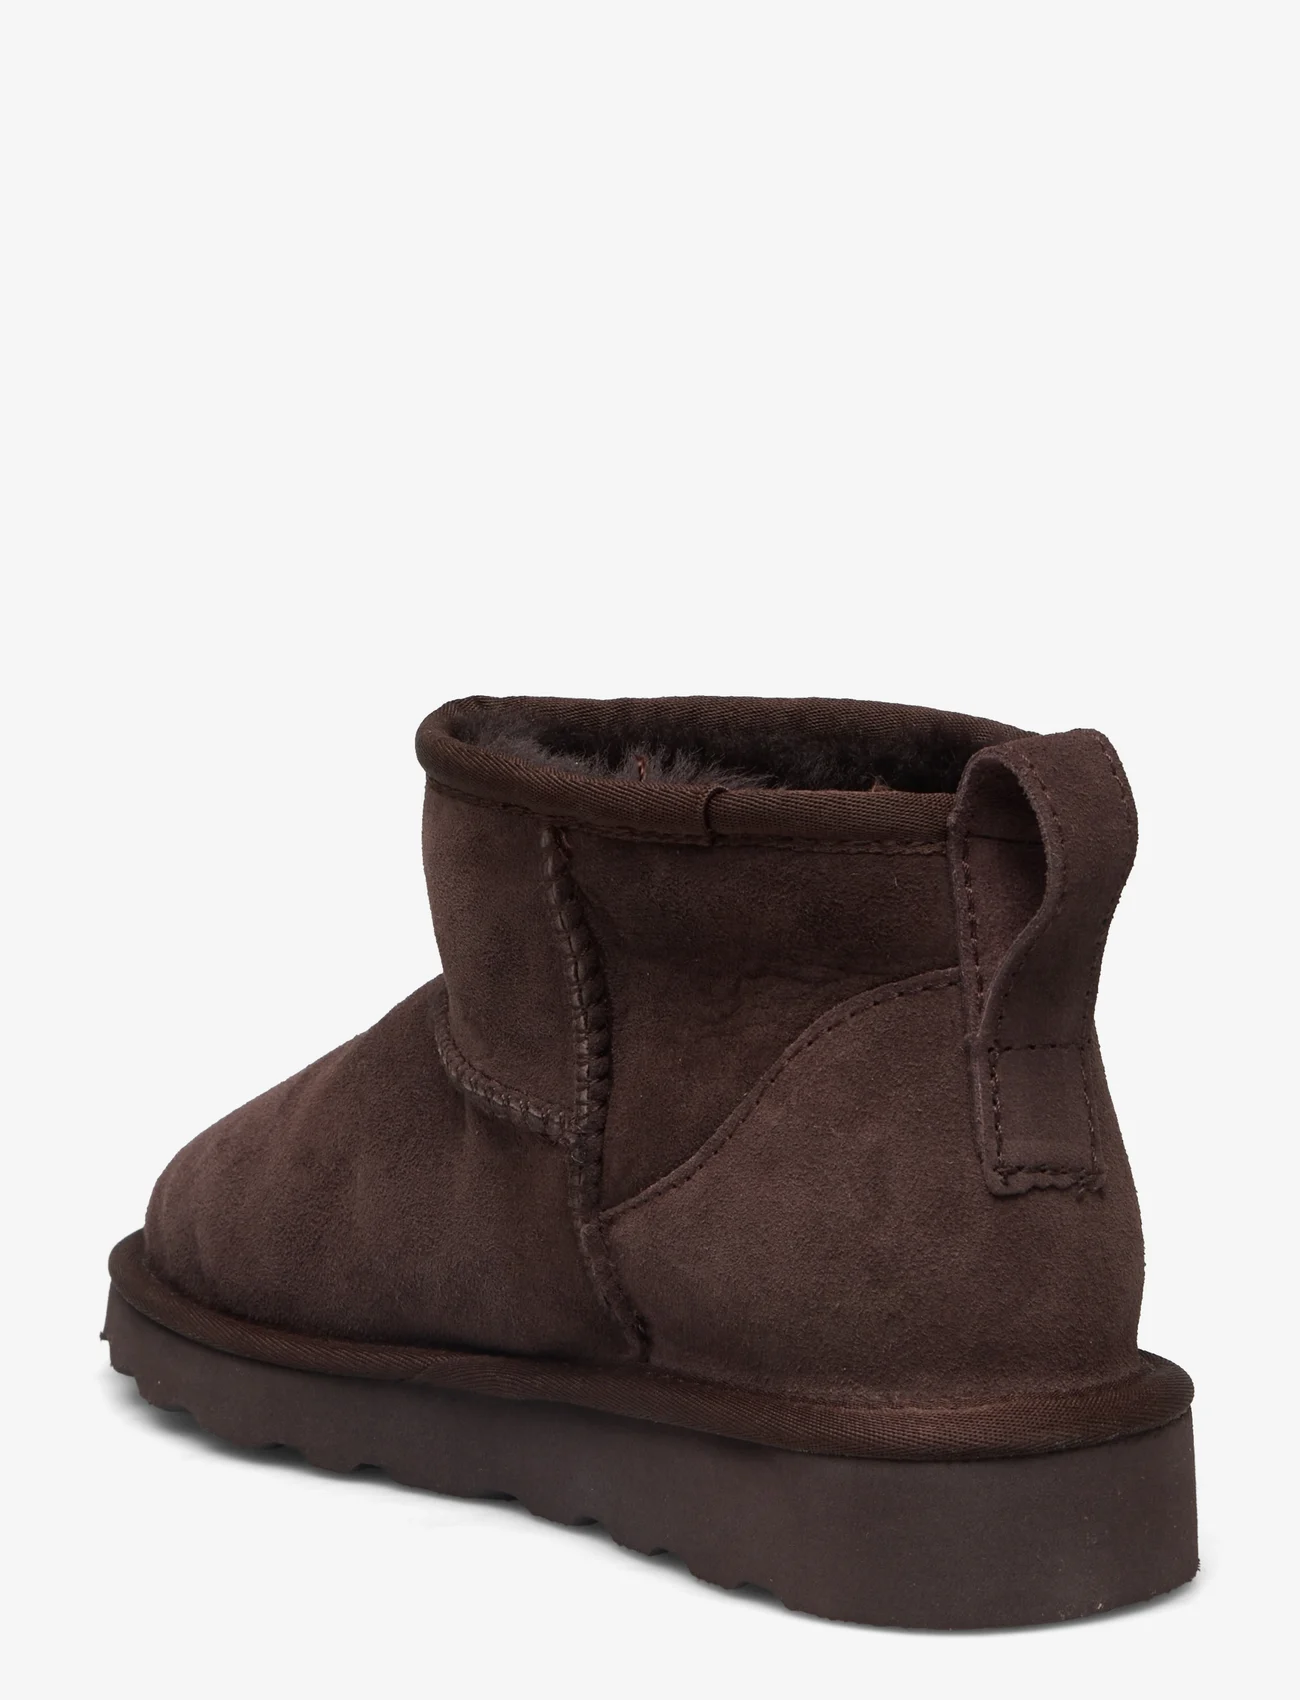 Rosemunde - Shearling boots - damen - coffee brown - 1